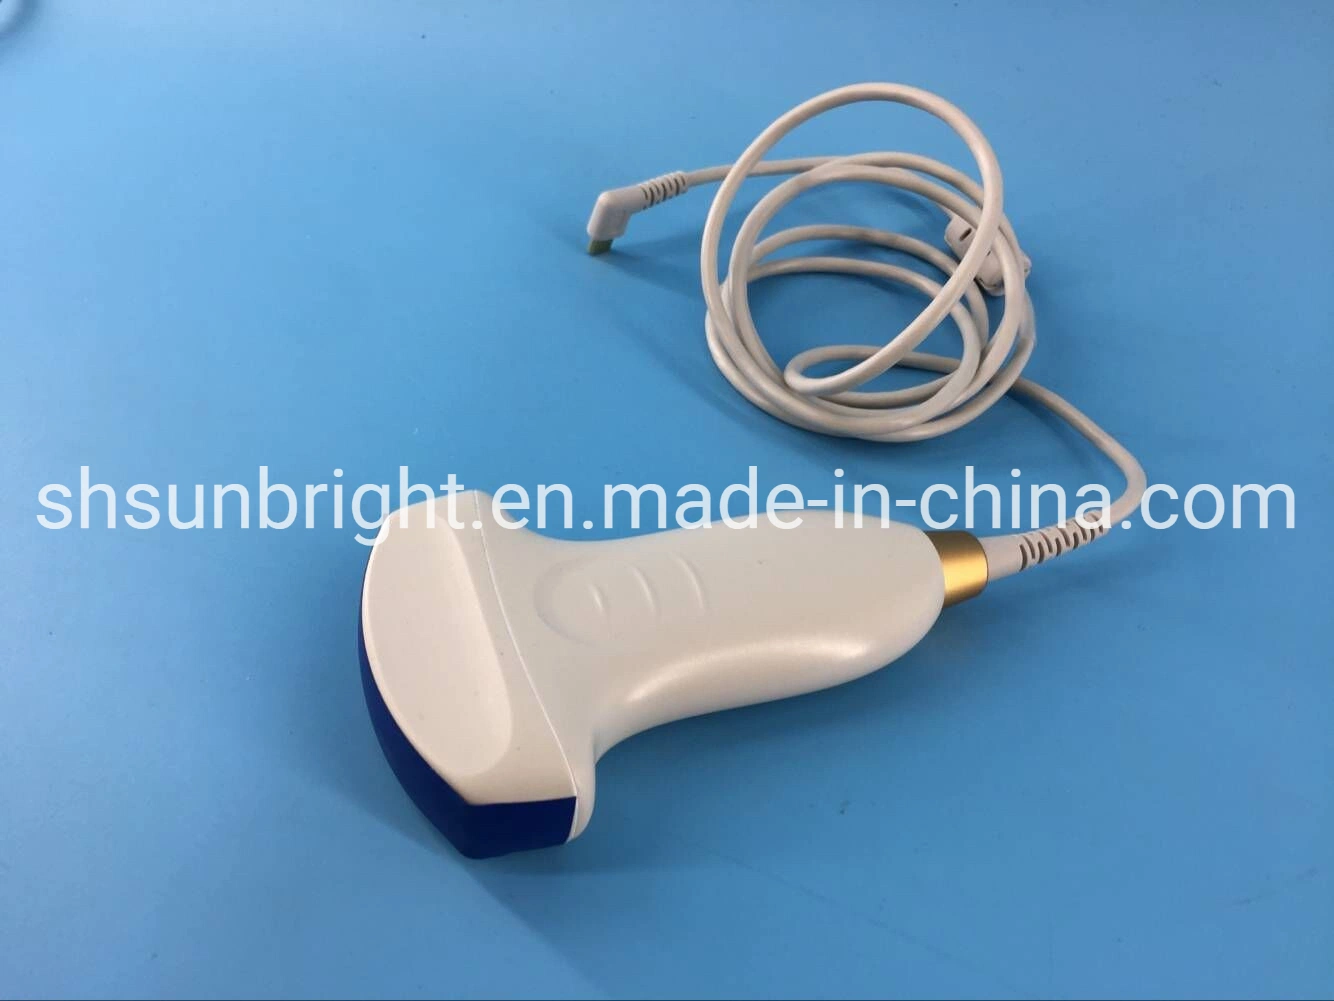 Product USB Ultrasound Probe Portable Ultrasound Machine Device